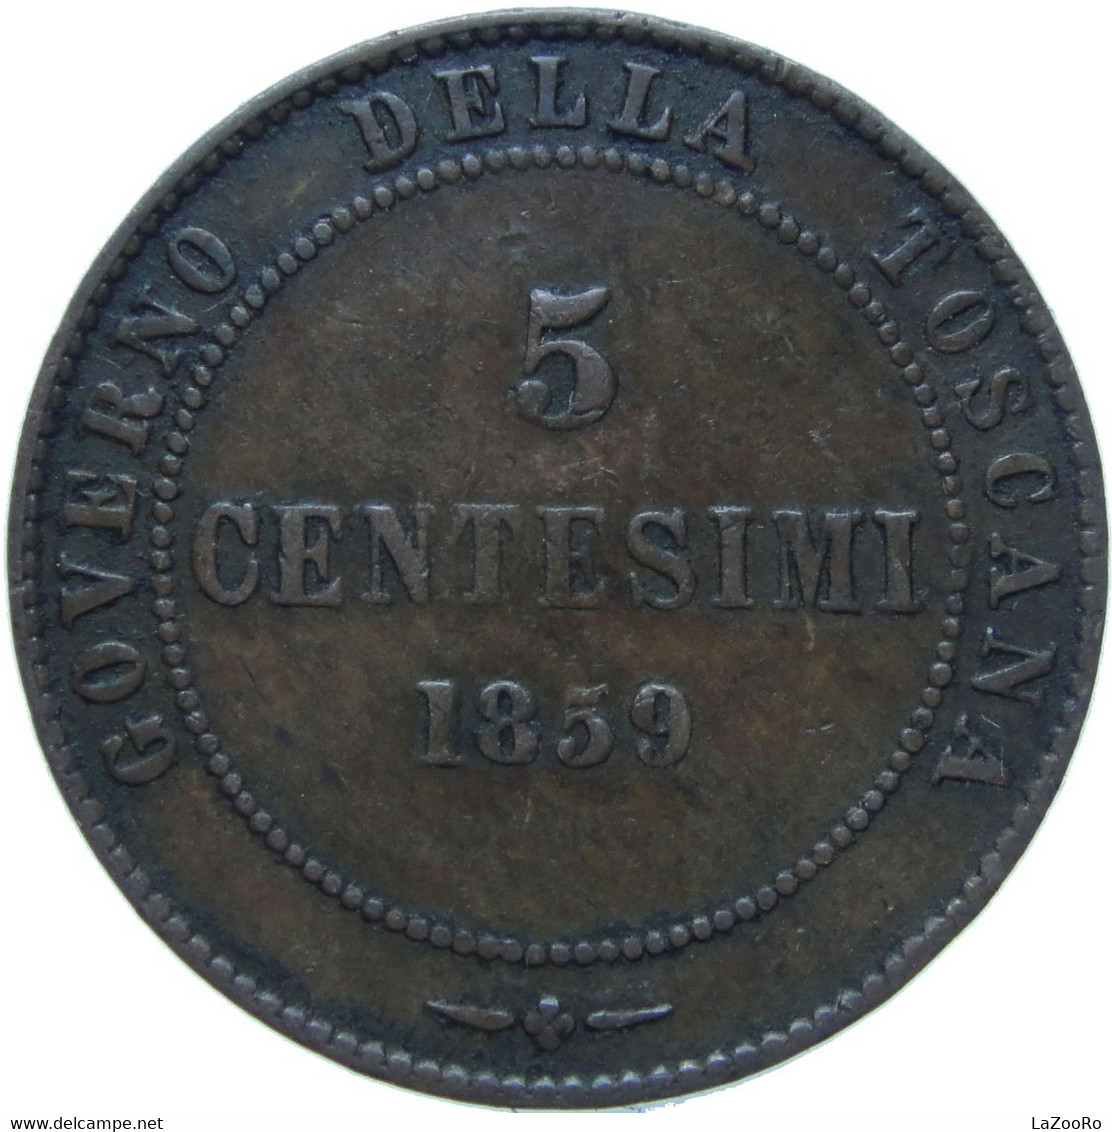 LaZooRo: Italy TUSCANY 5 Centesimi 1859 VF - Toscane